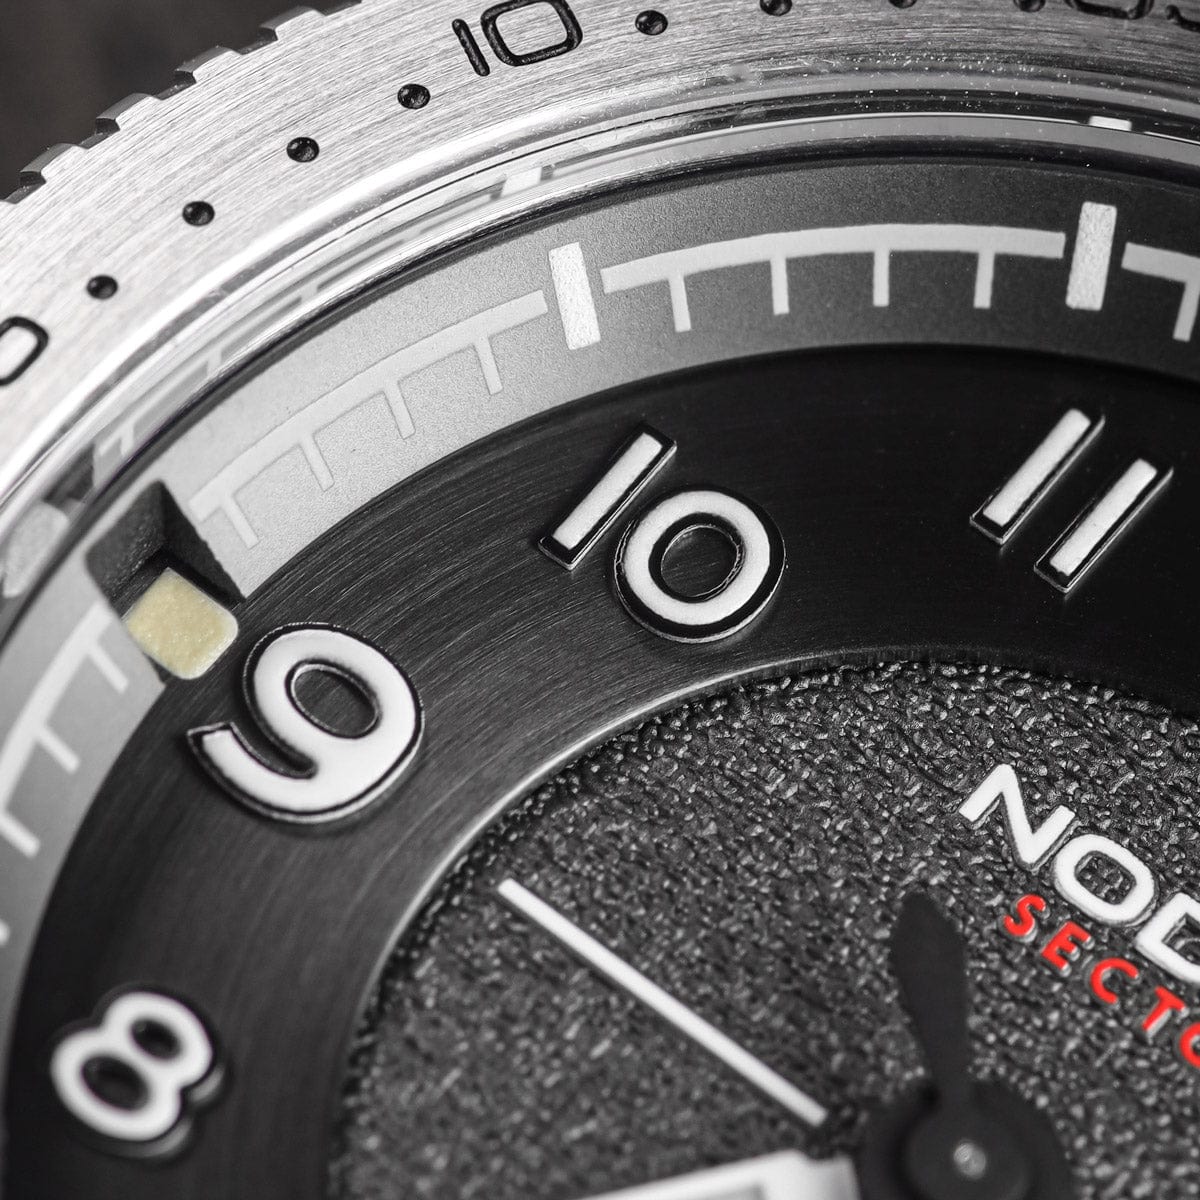 Nodus Sector Pilot Automatic Watch - Corsair Grey - DLC Bezel - NEARLY NEW